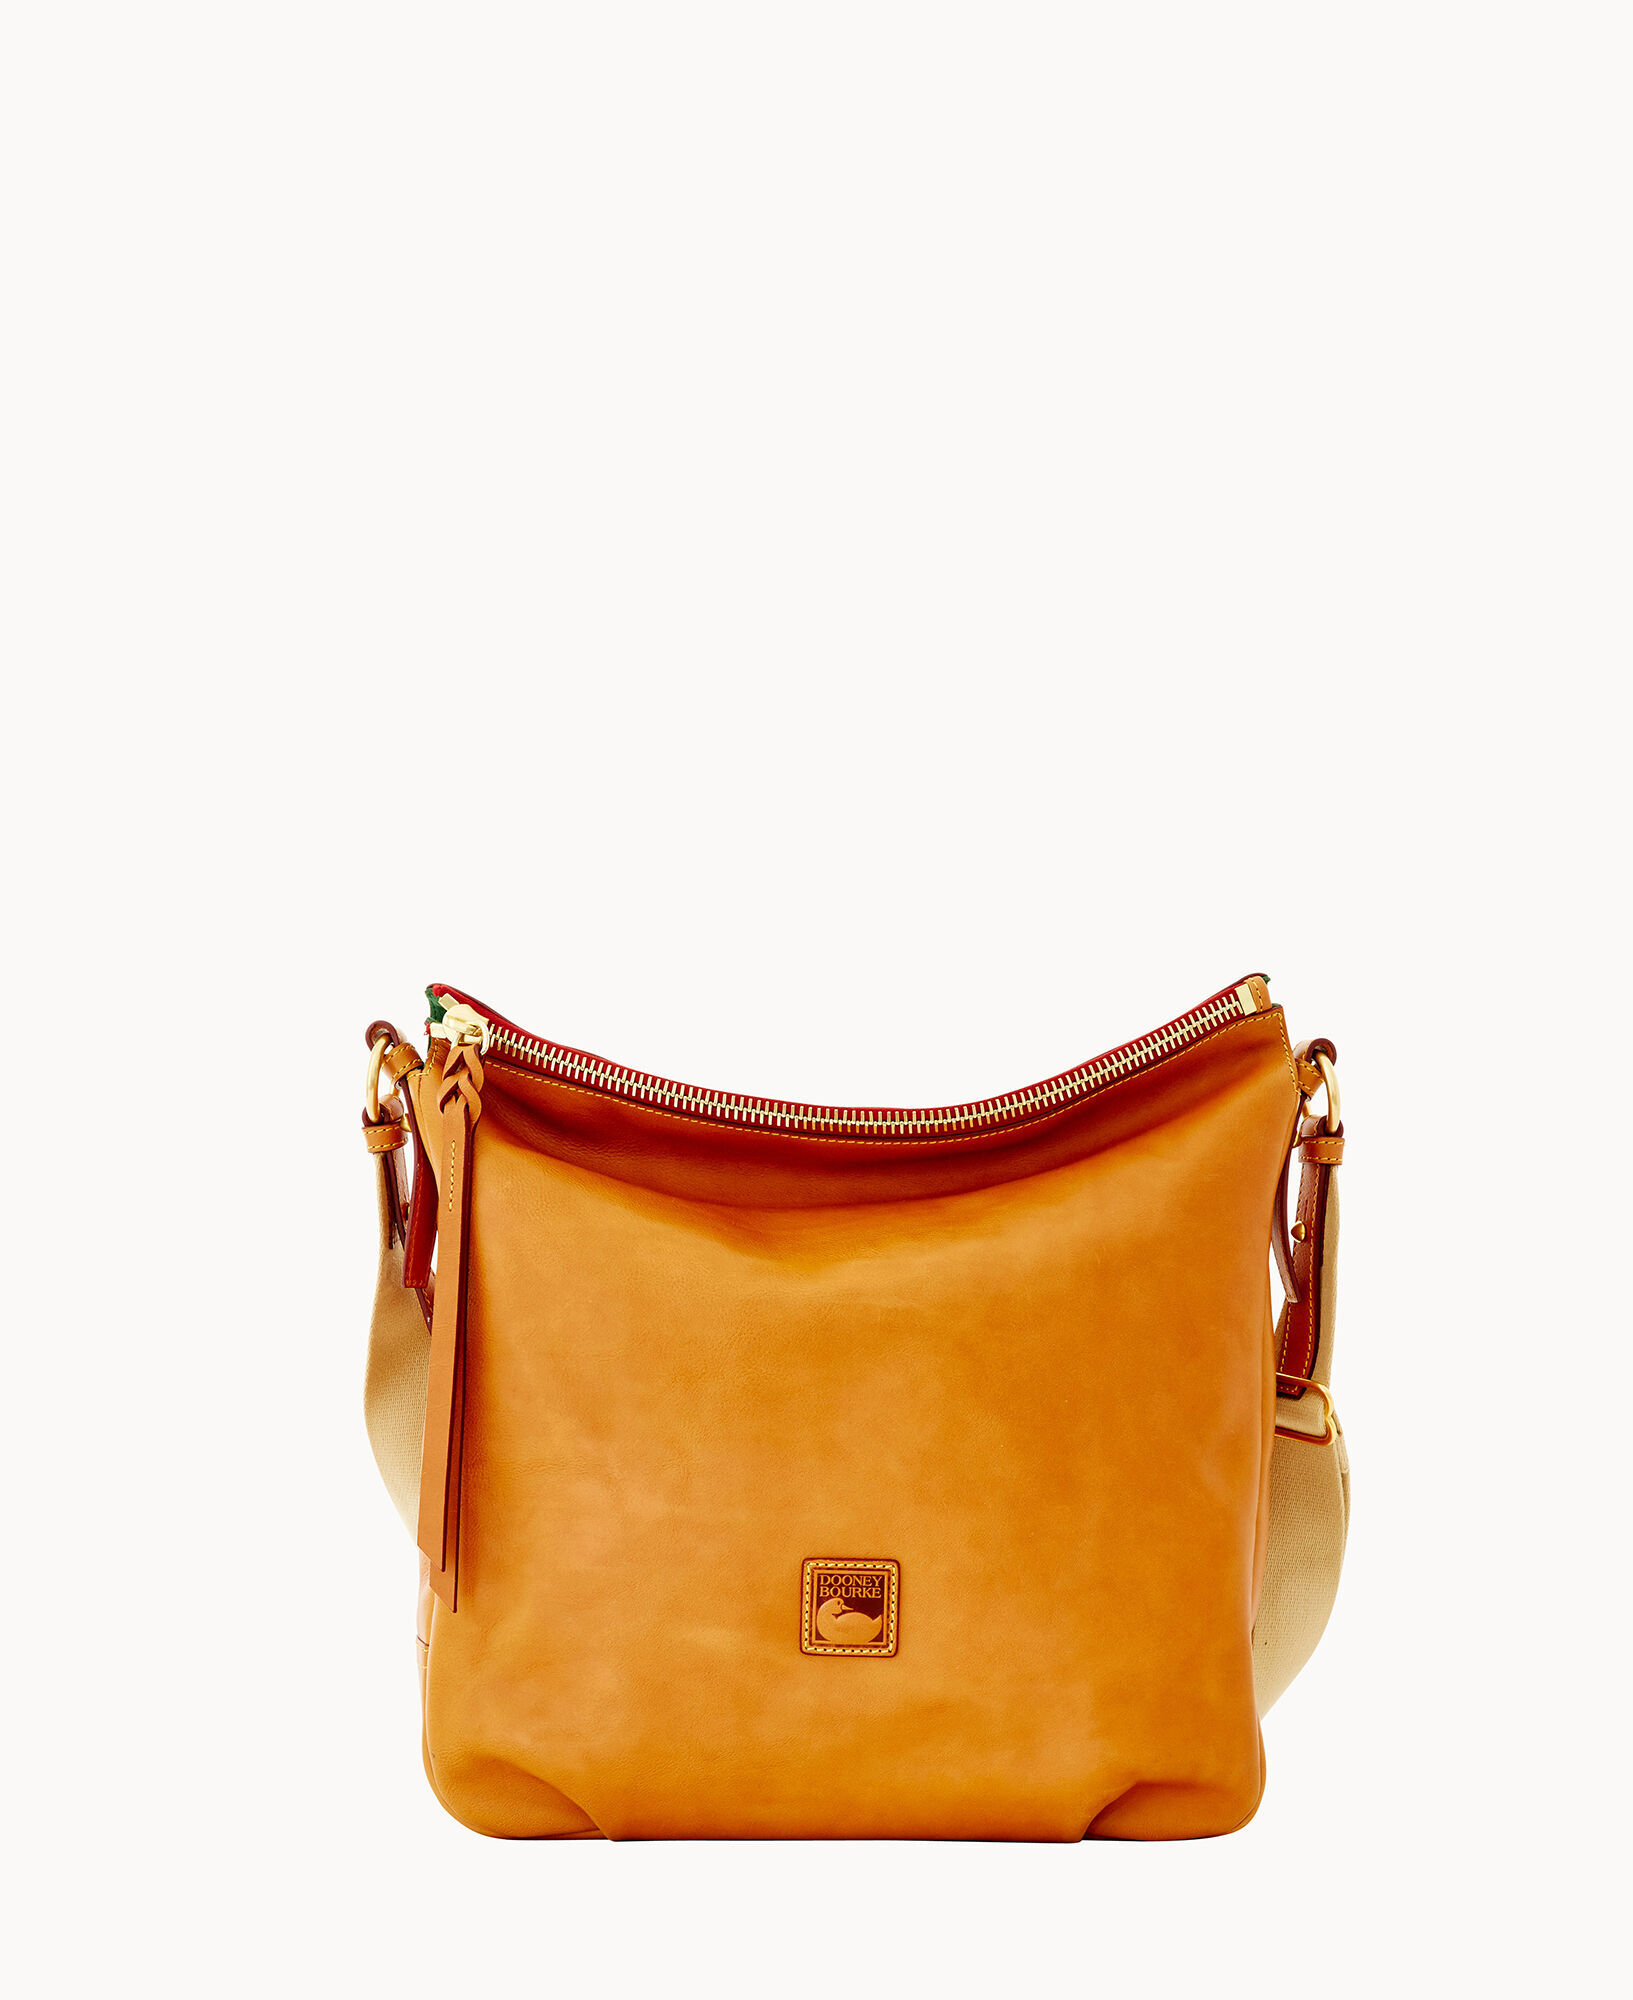 What makes that designer handbag so expensive? - CNA